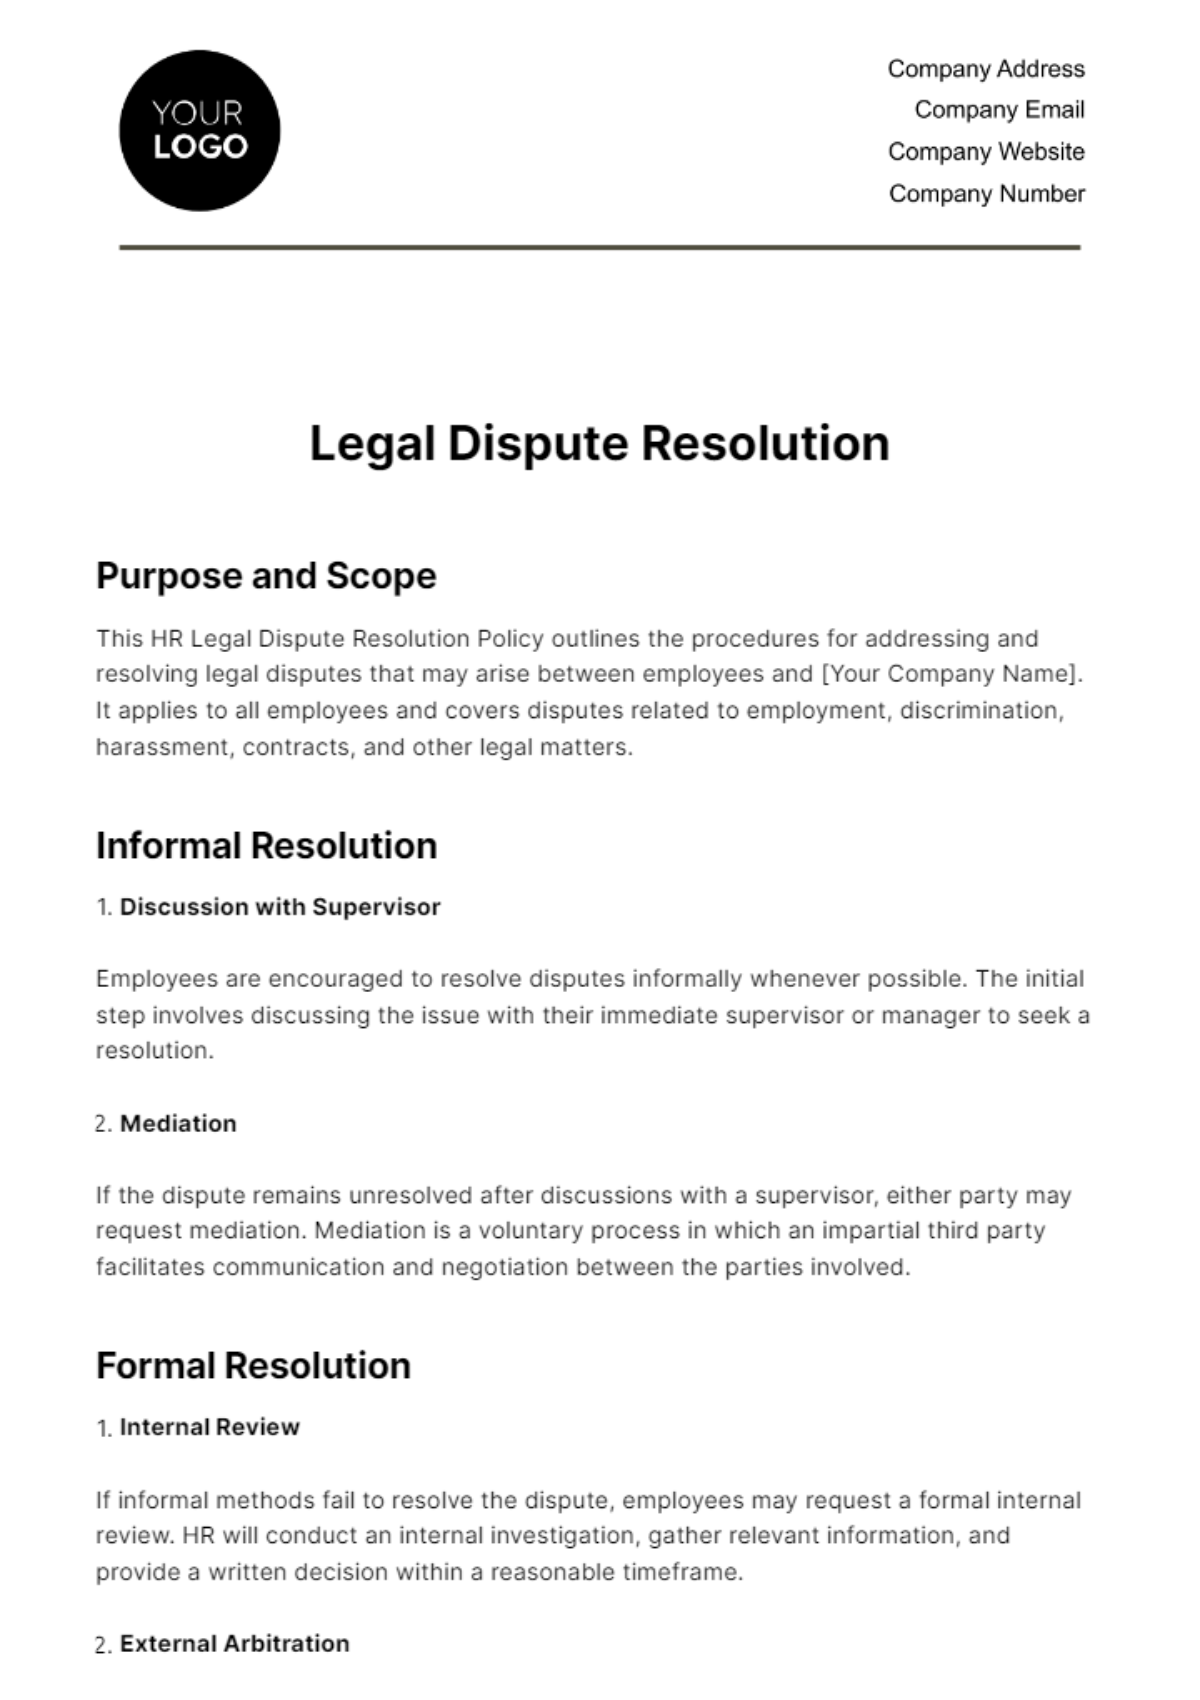 Legal Dispute Resolution HR Template